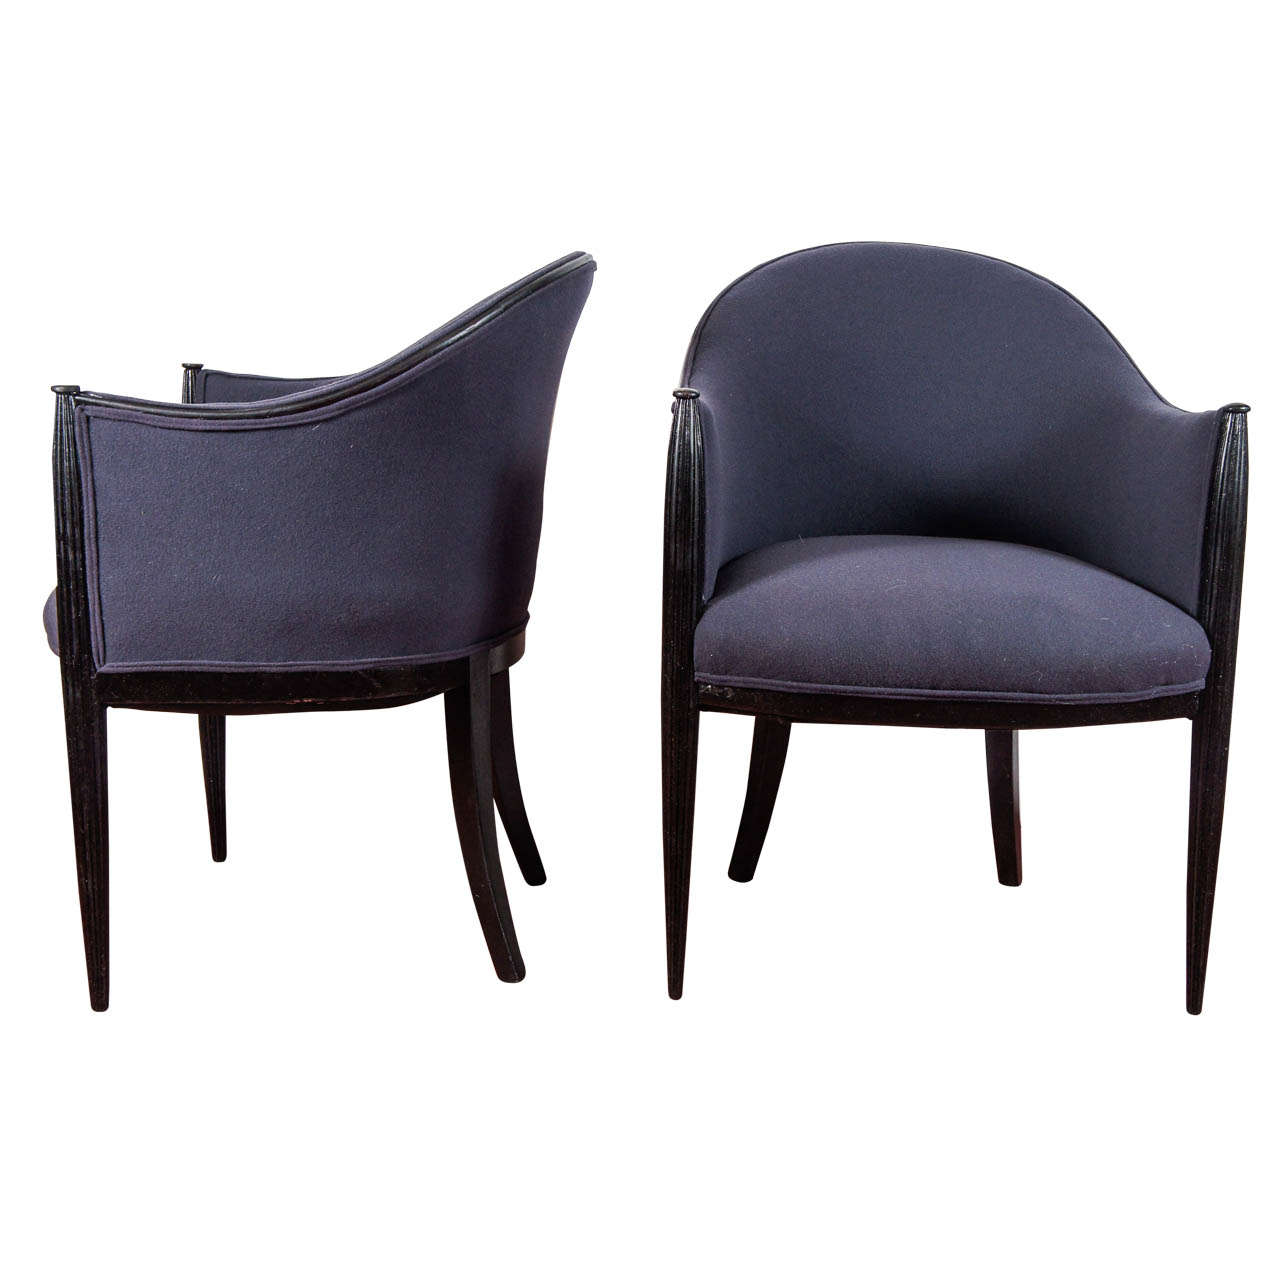 Paar Rhulmann- oder Paul Follot-Stühle im Stil - Preis pro Paar im Angebot